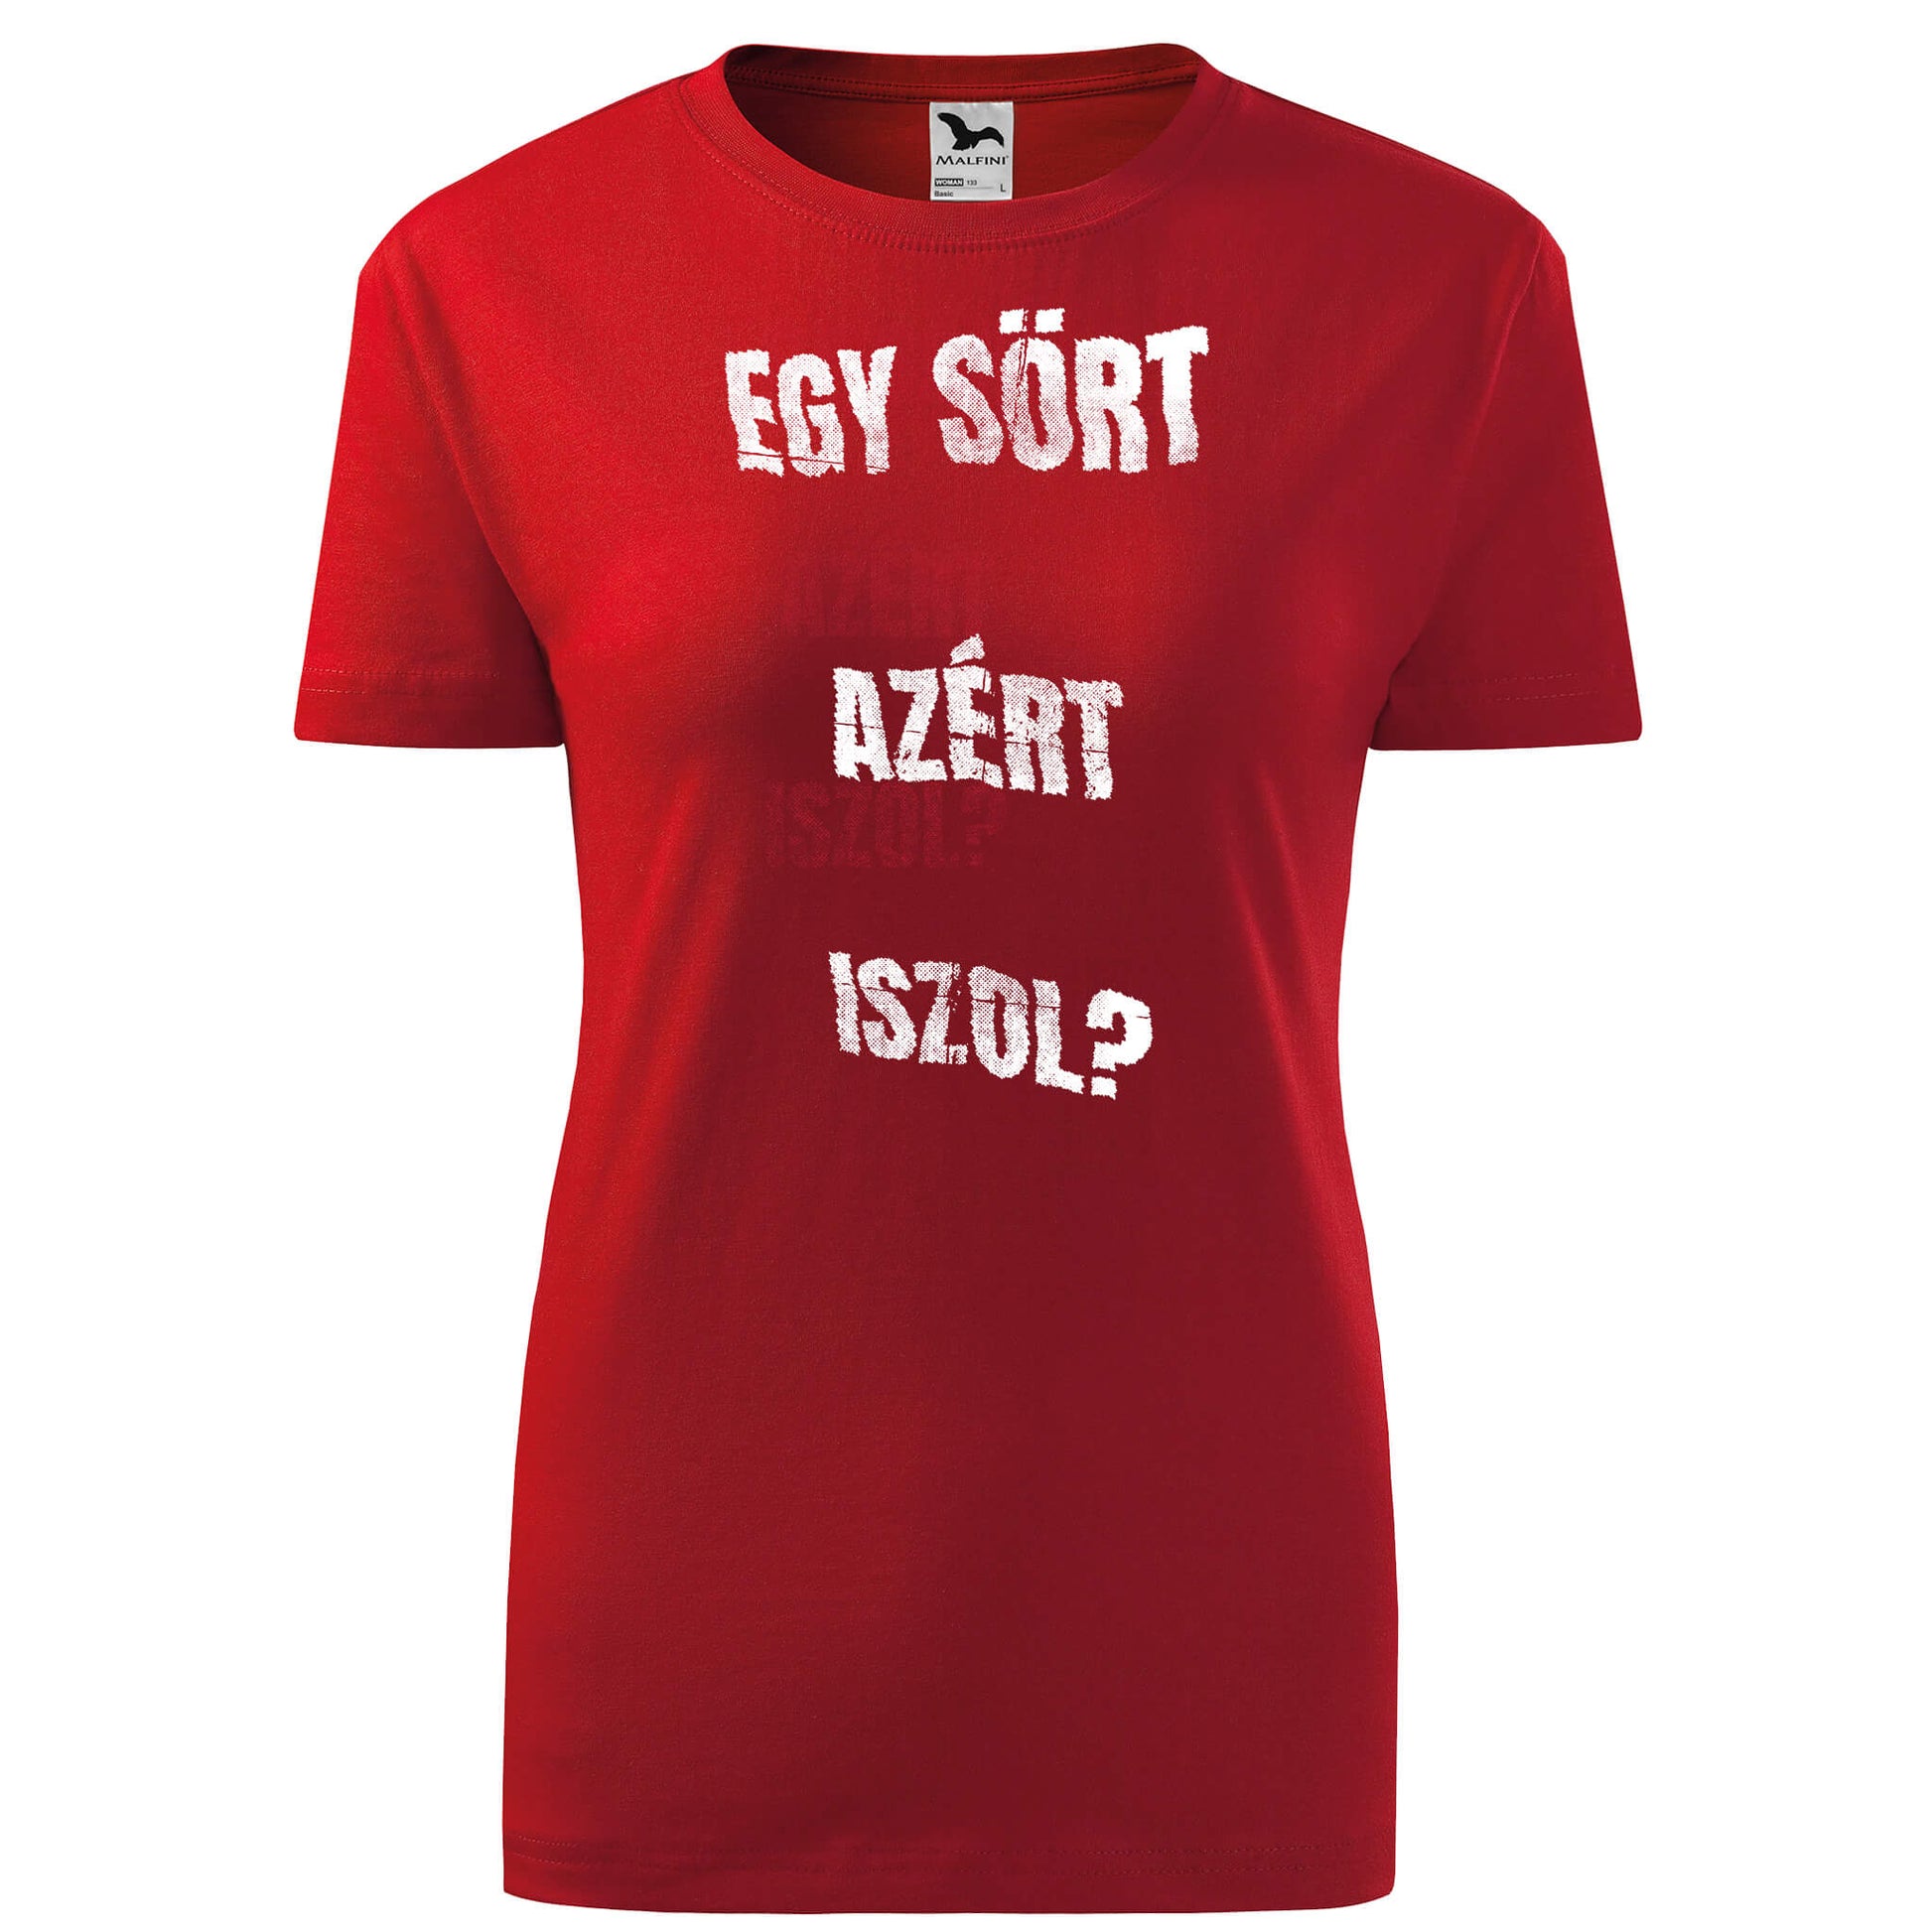 Egy sort azert iszol t-shirt - rvdesignprint